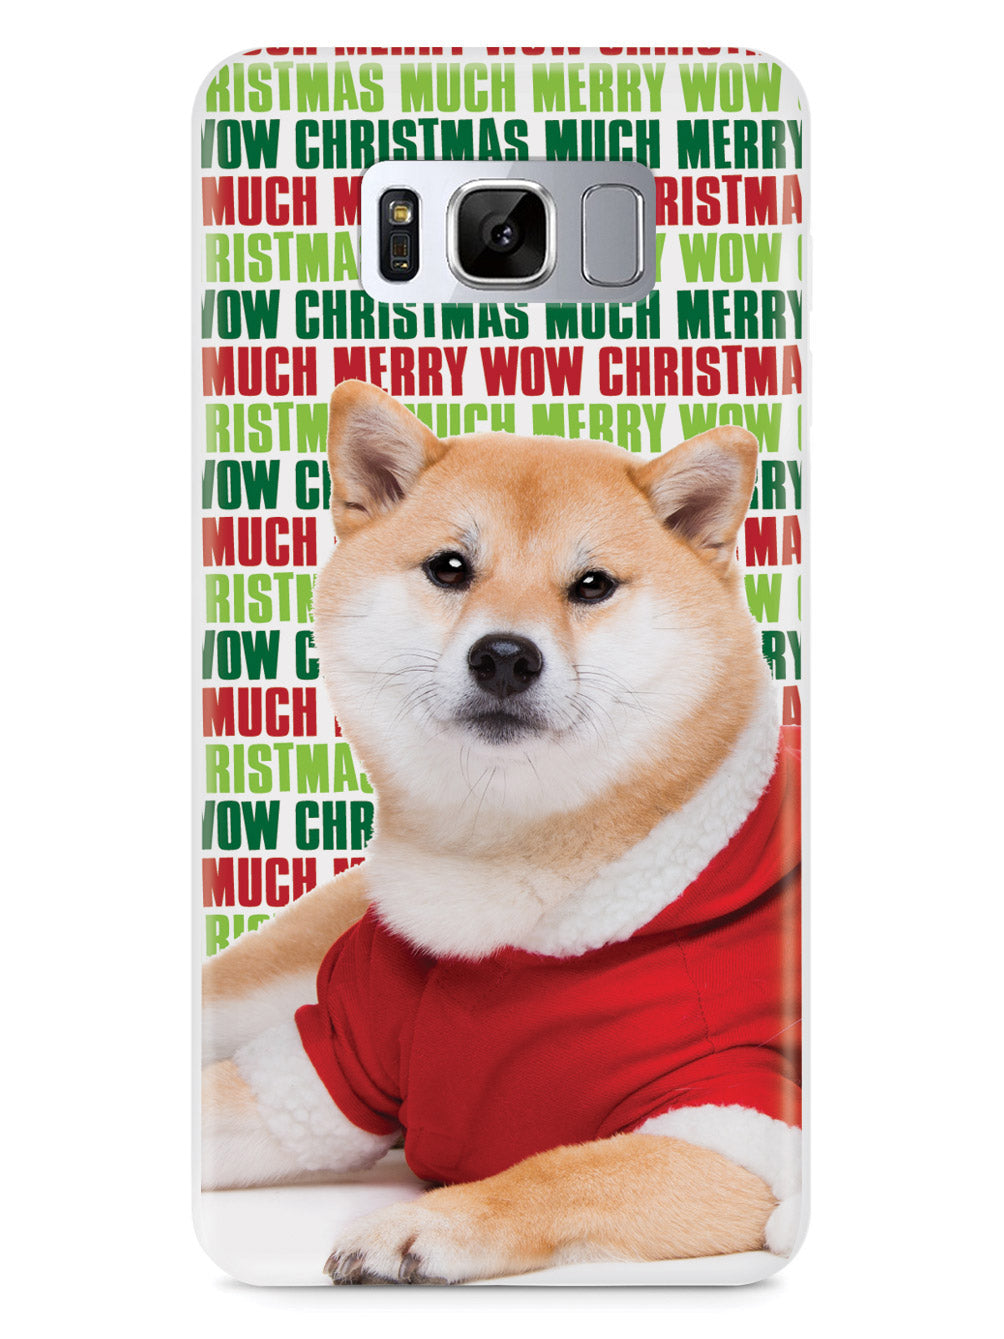 Much Merry, Wow Christmas - Shiba Inu Case